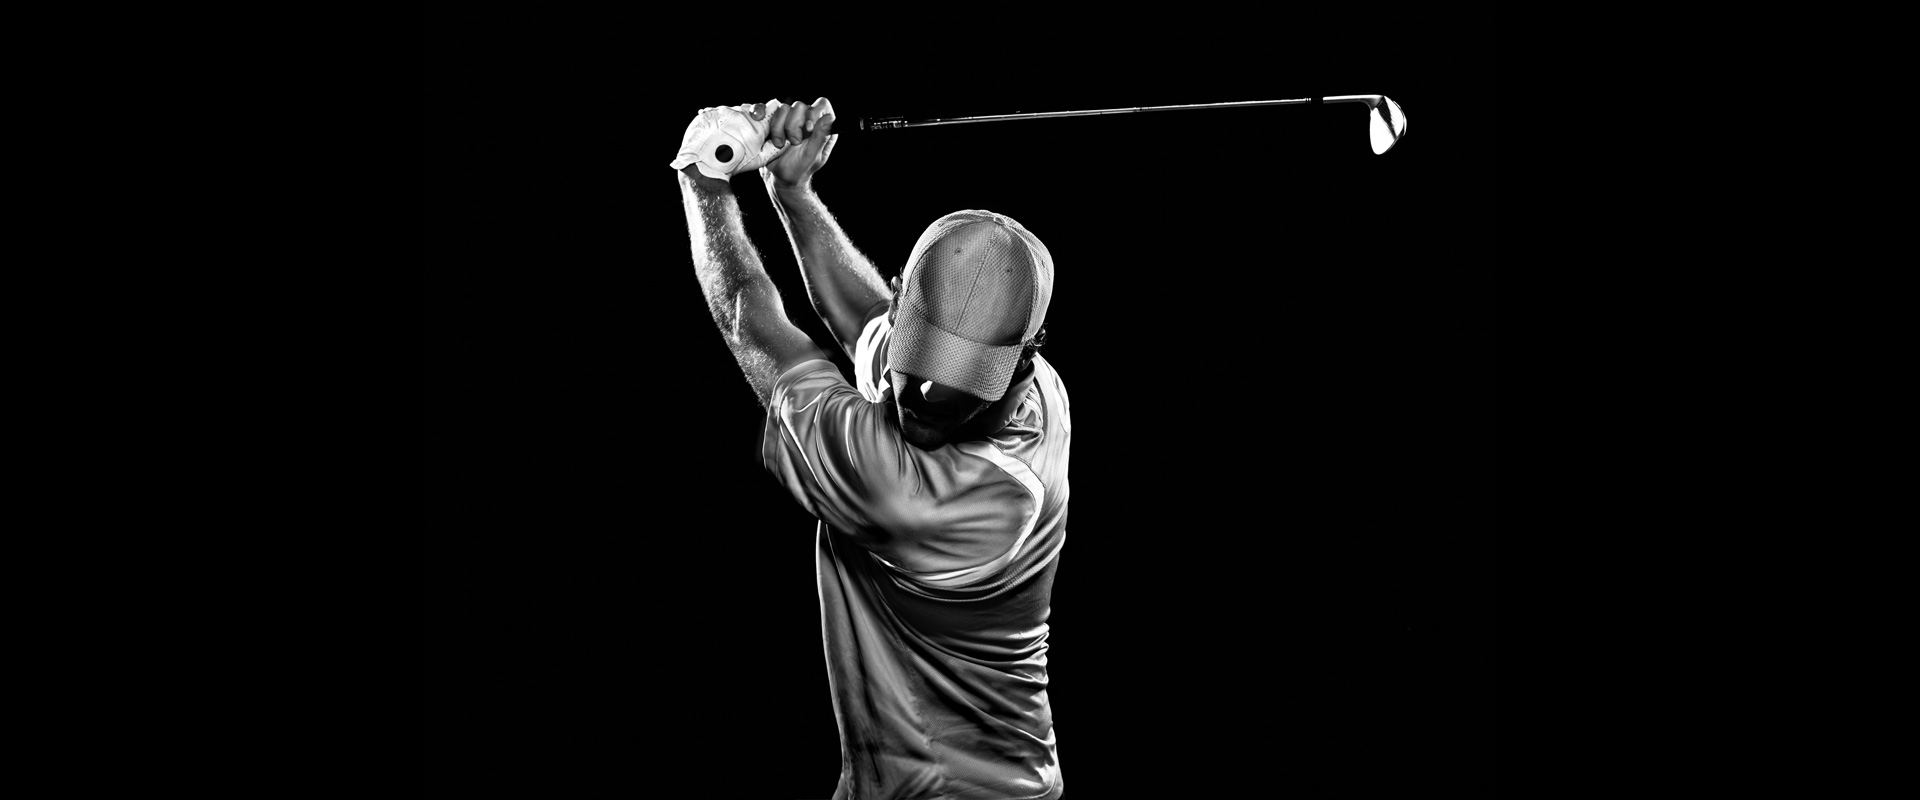 Rehab 2 Fitness - Maximize Golf Performance